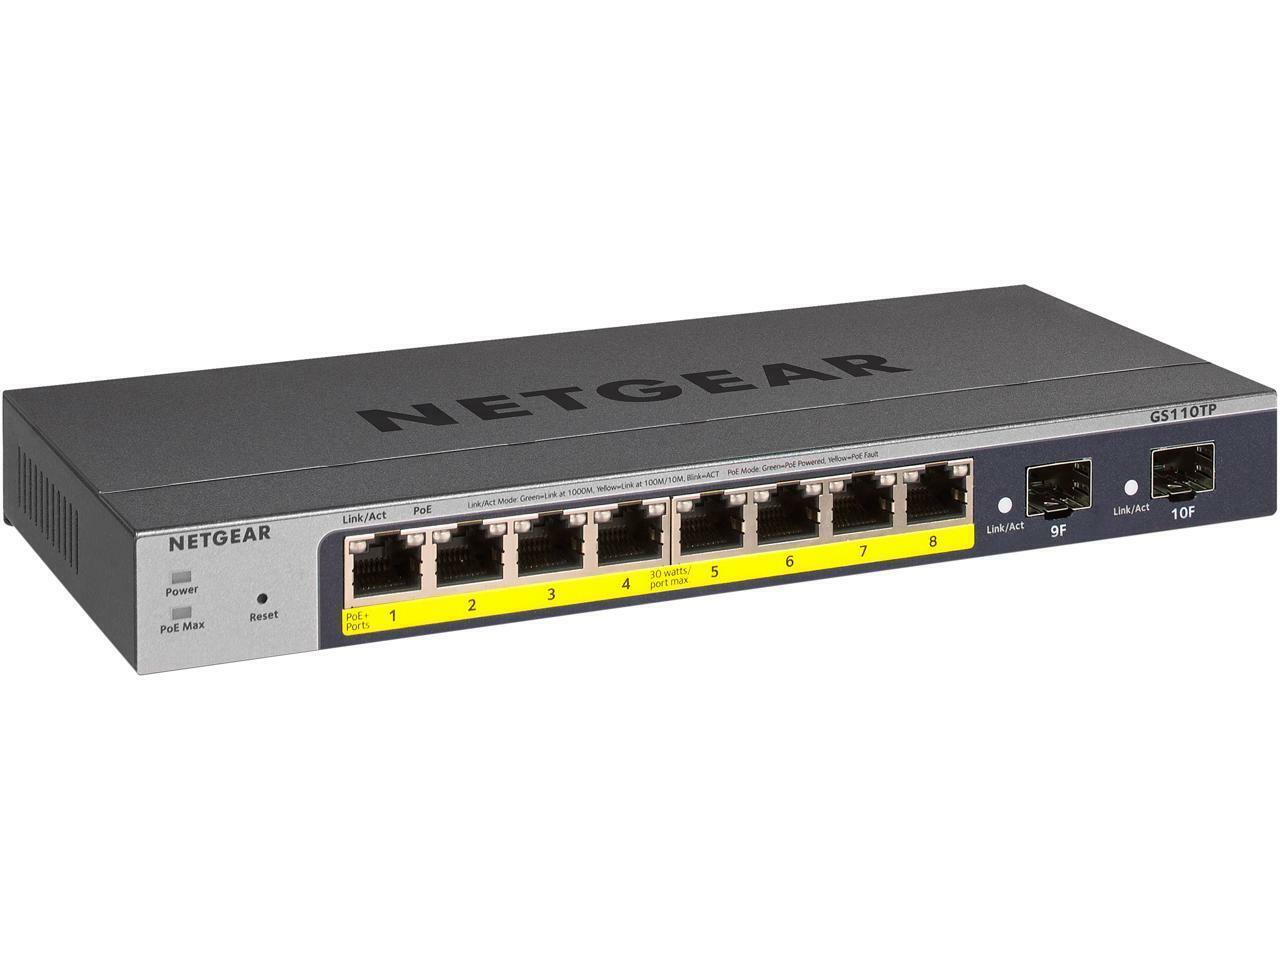 NETGEAR 8-Port Gigabit PoE+ Ethernet Smart Managed Pro Switch with 2 SFP Ports (